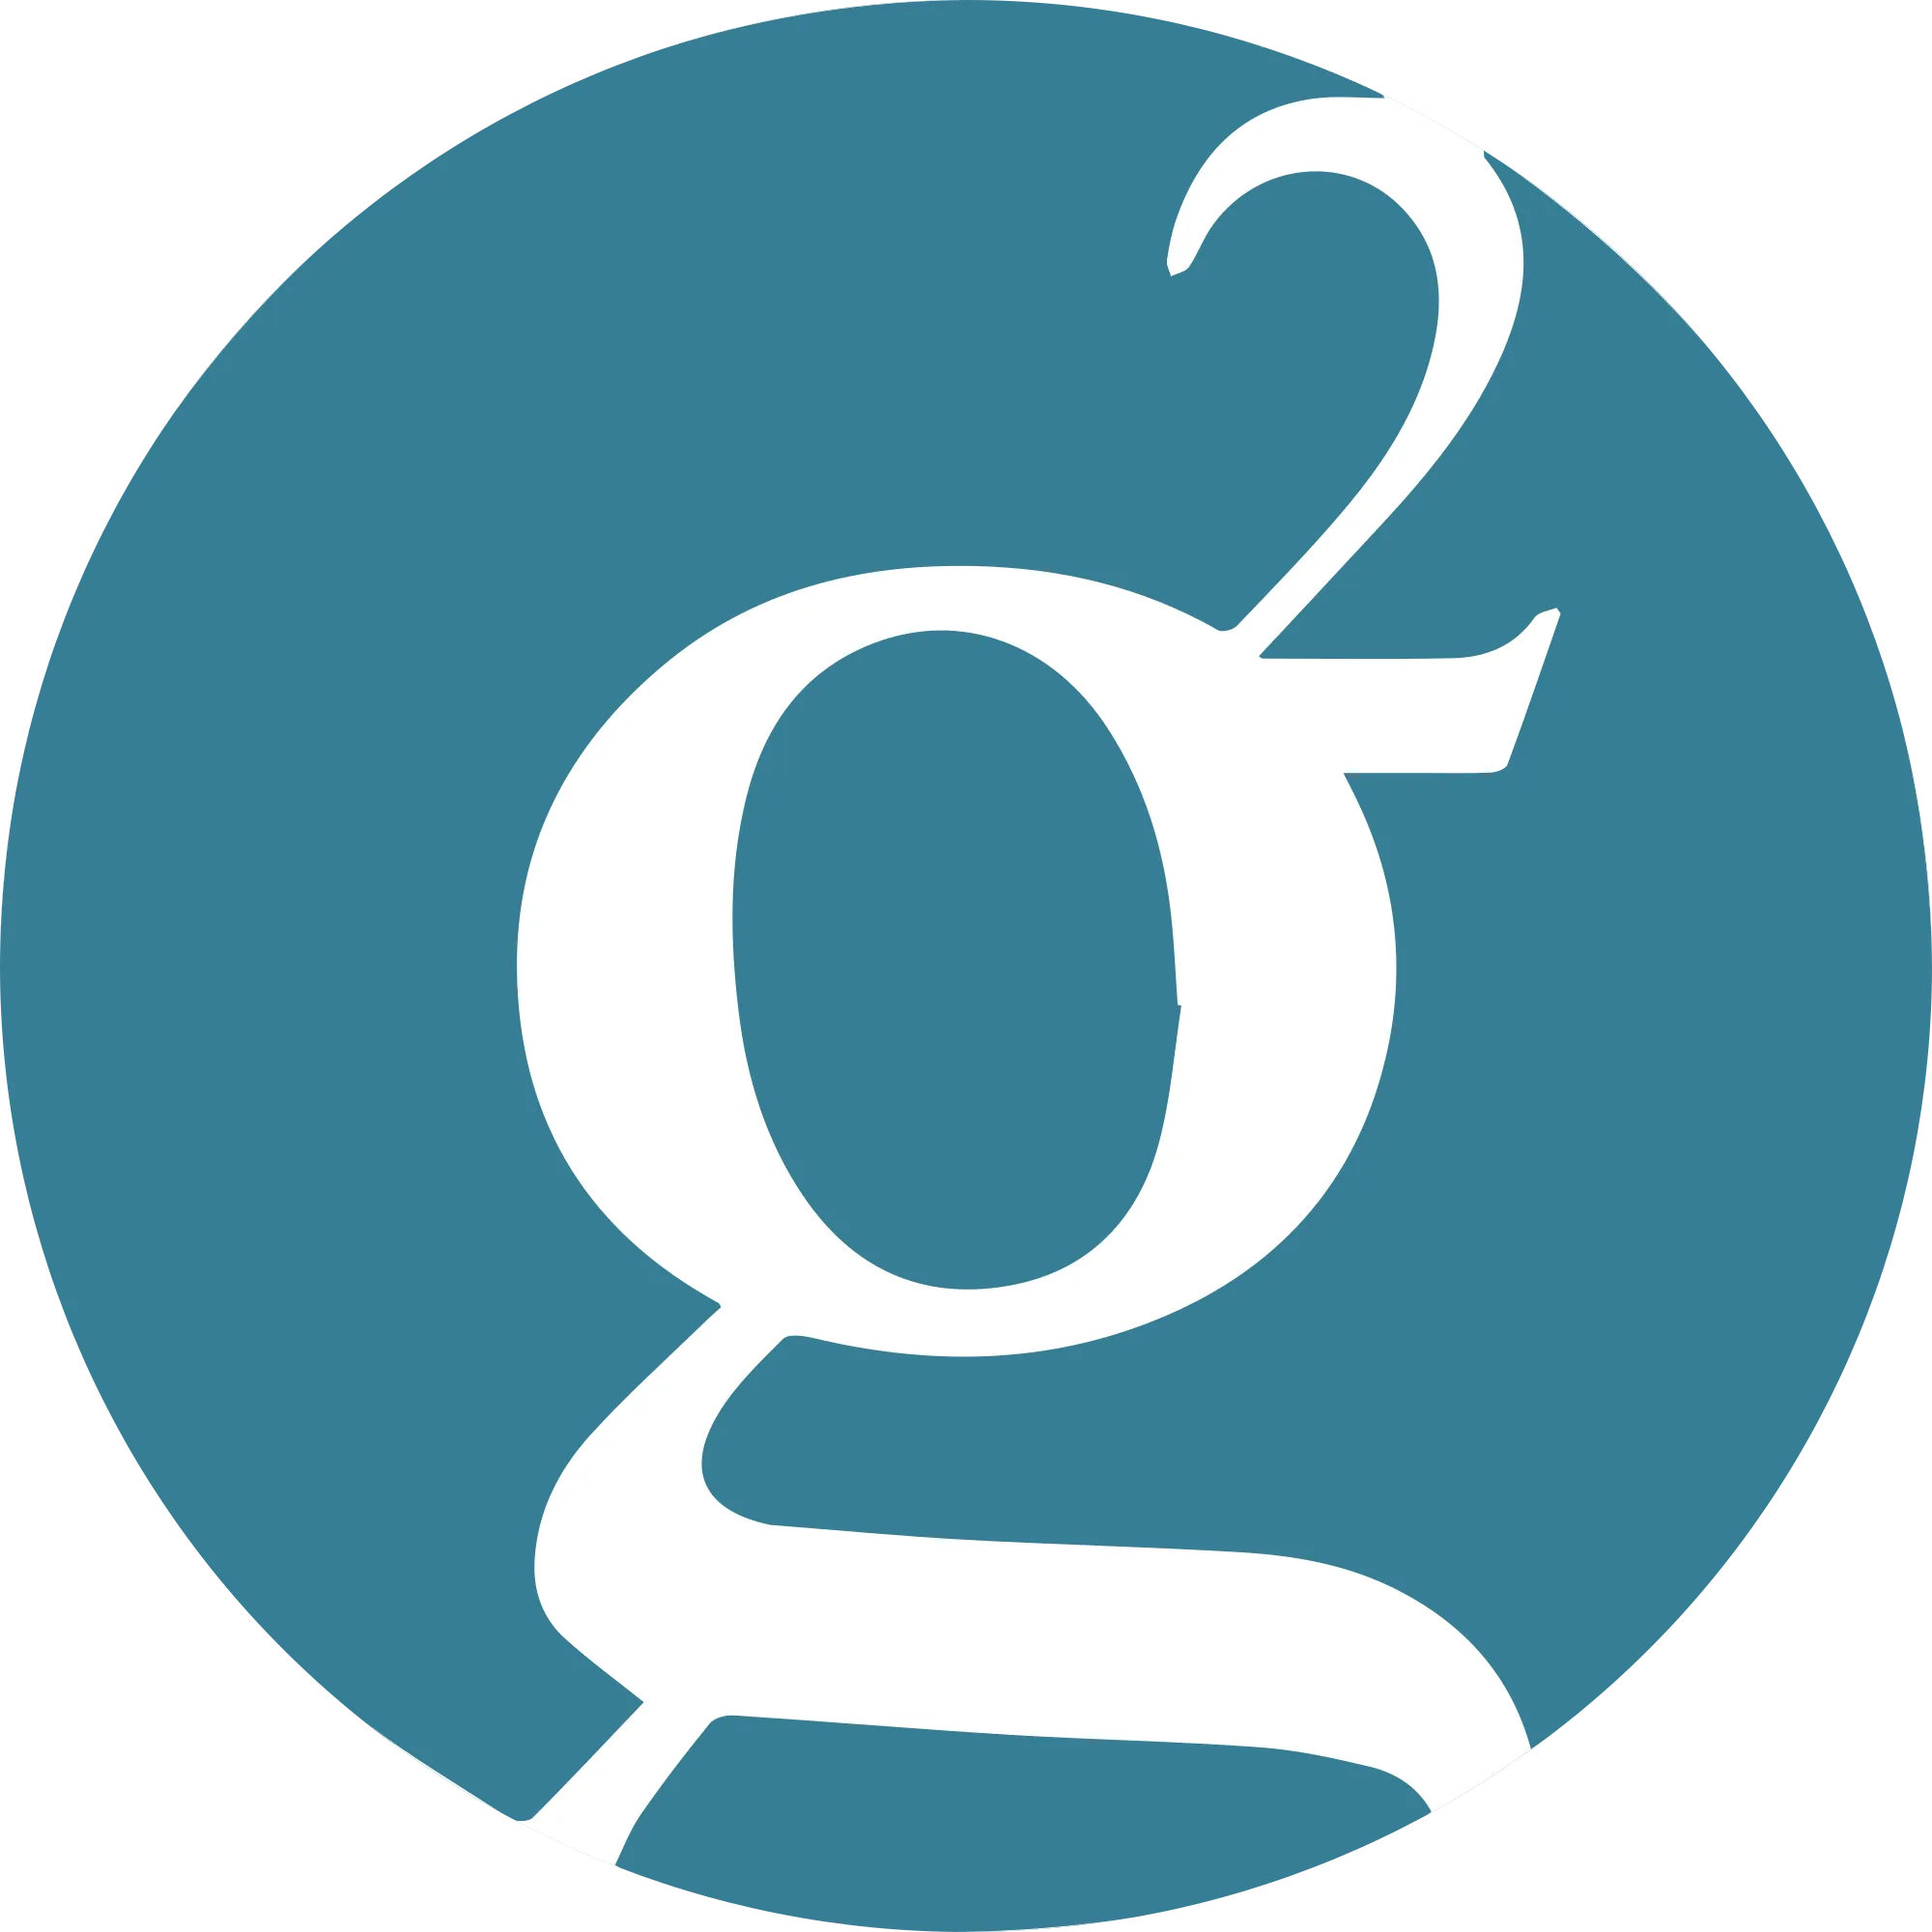 Groestlcoin logo in png format